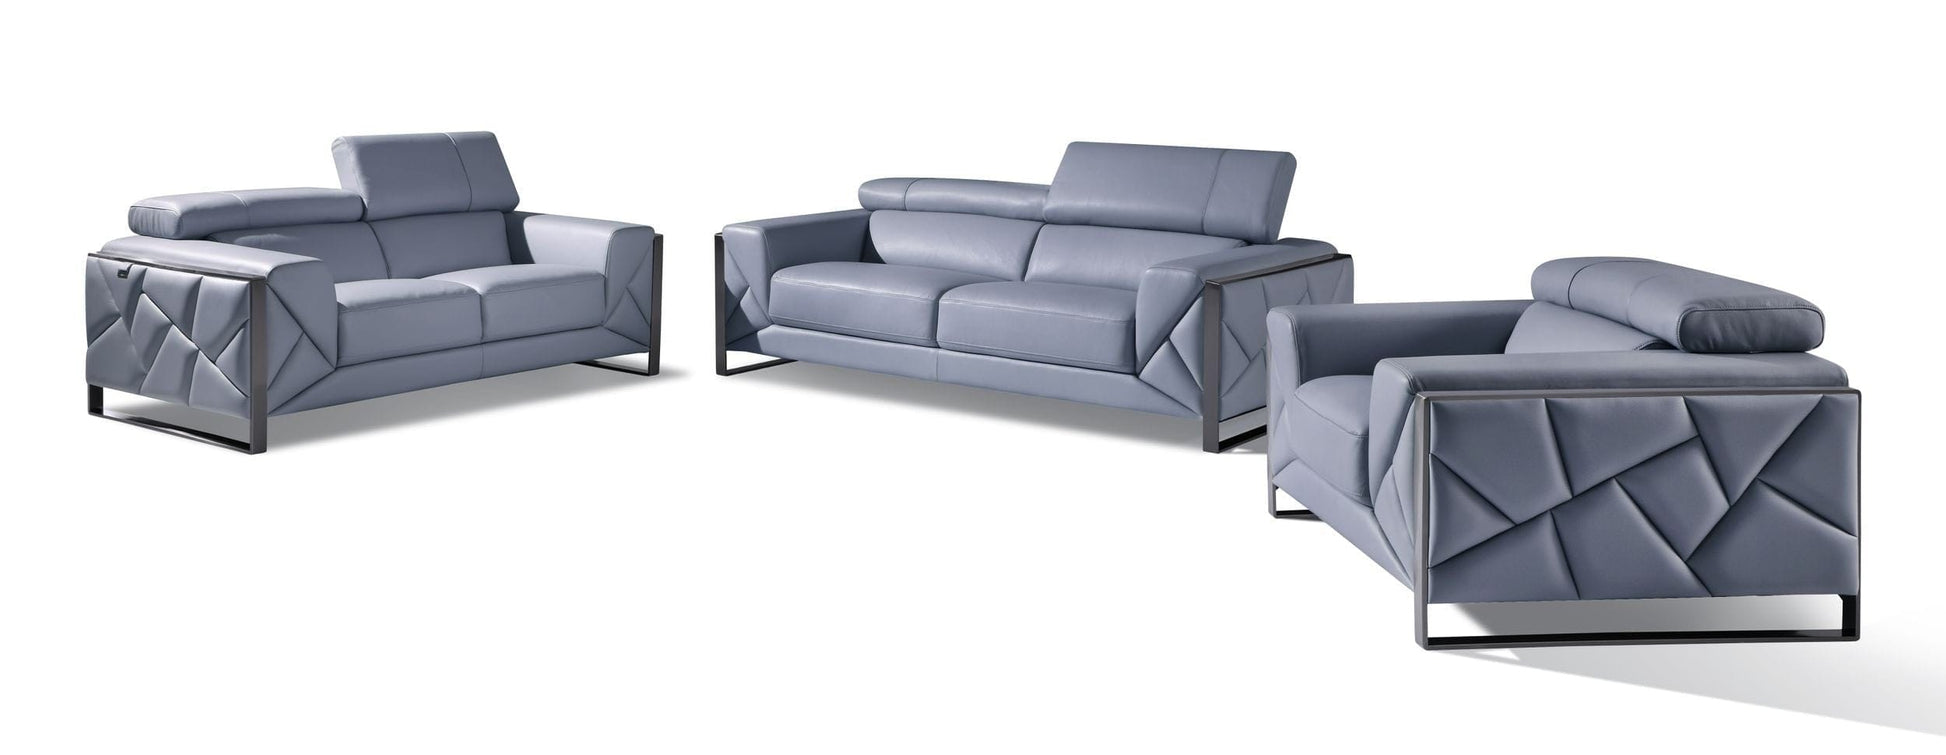 by Global United Sofa 3PC Set - Sofa | Loveseat | Armchair / Light Blue Global United 903 - Divanitalia 3PC Sofa Set